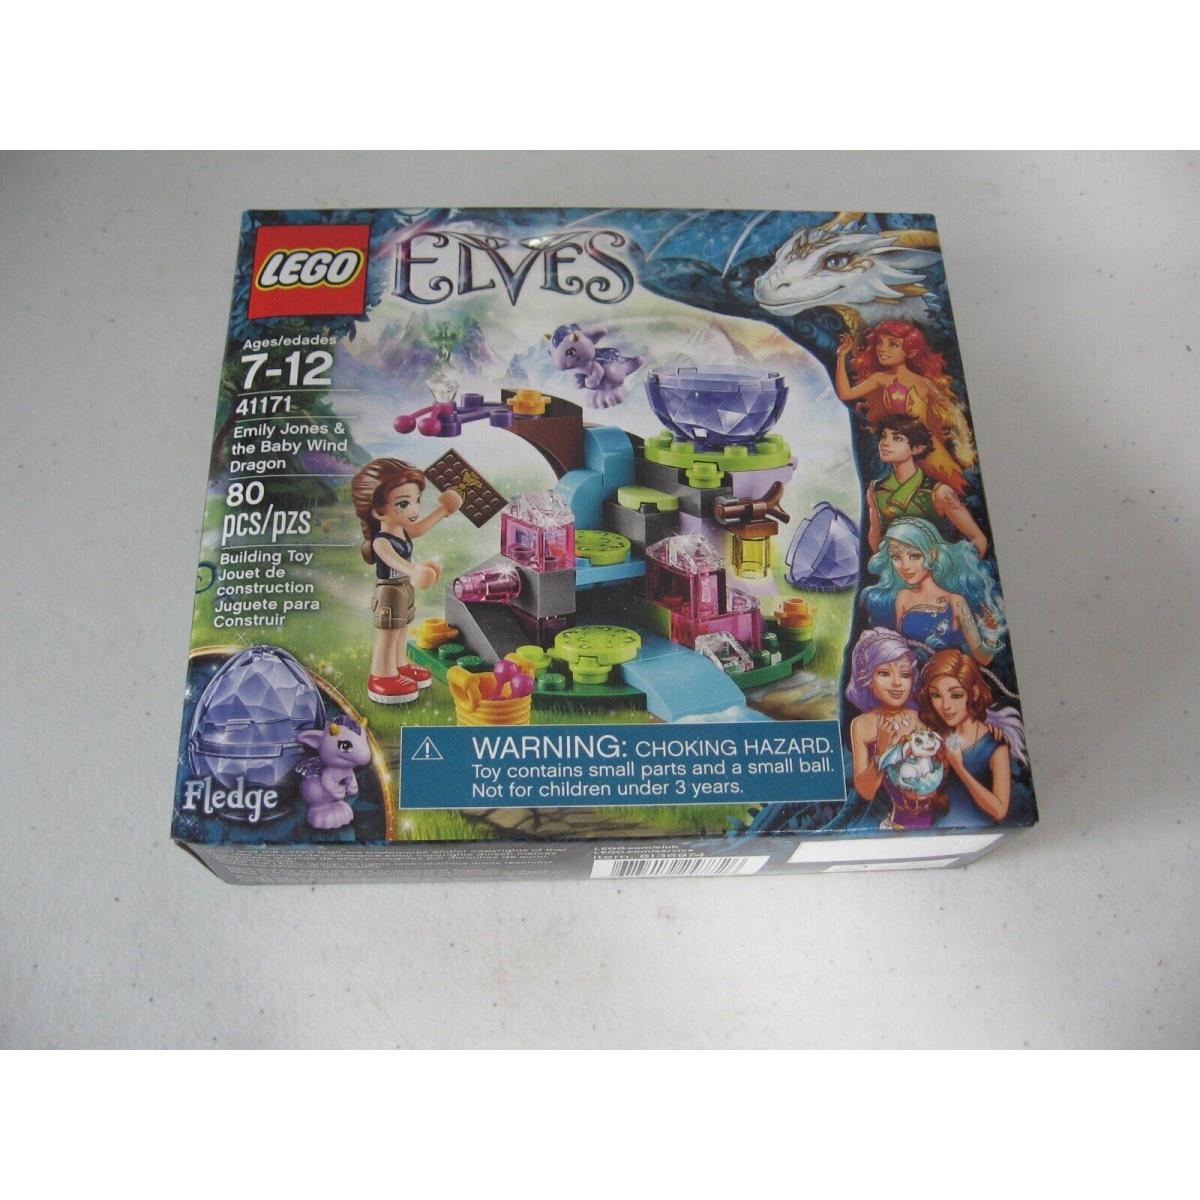 Lego Elves Emily Jones The Baby Wind Dragon Set 41171